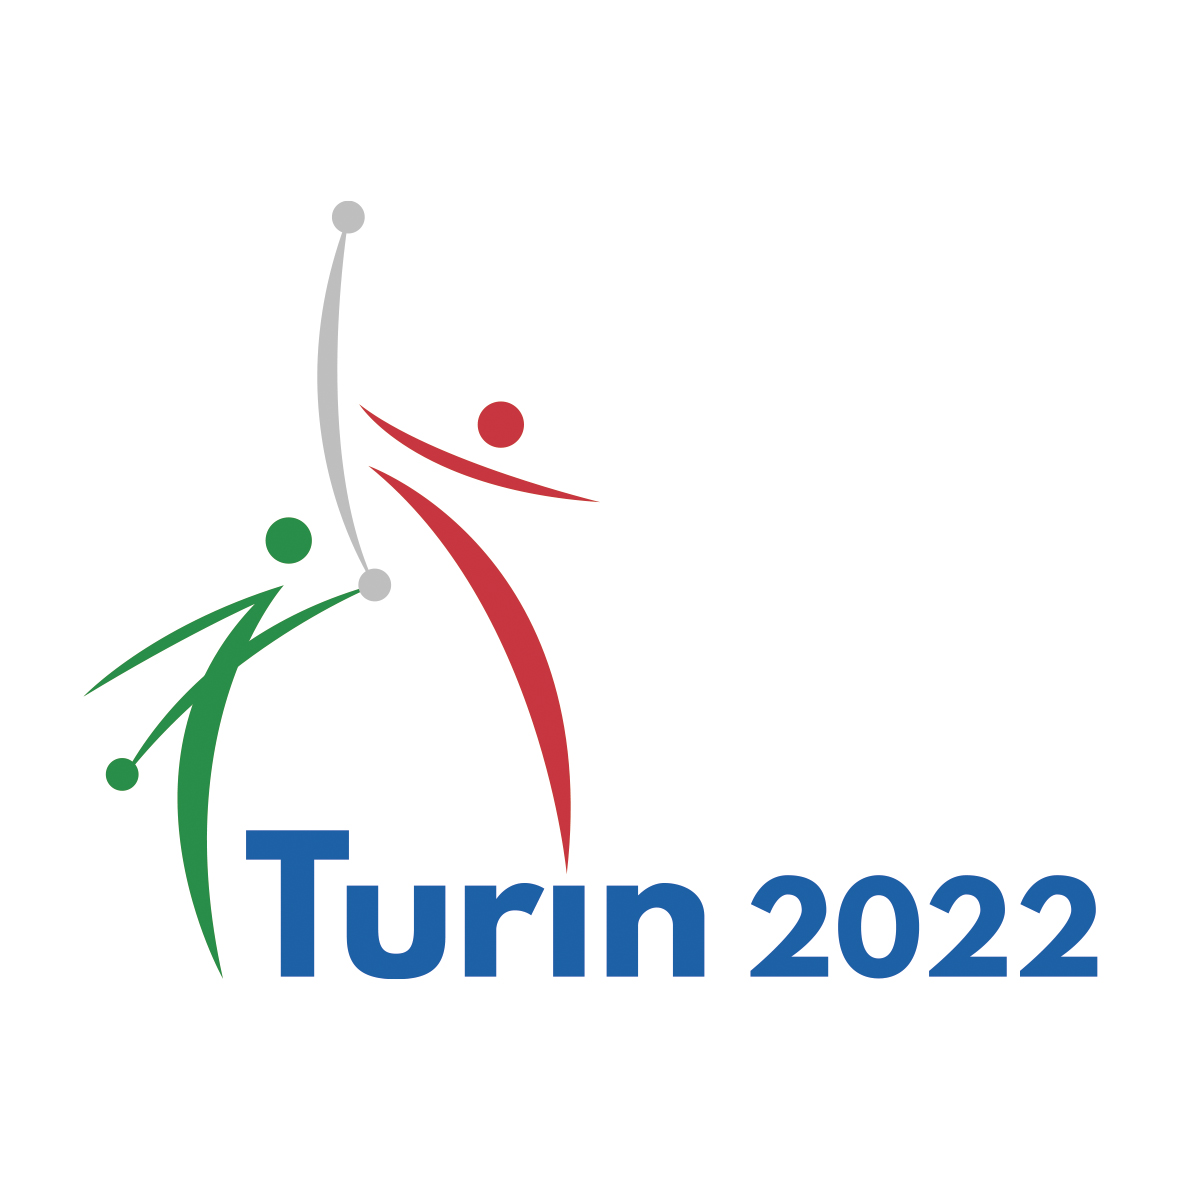 Turin2022 logo RGB